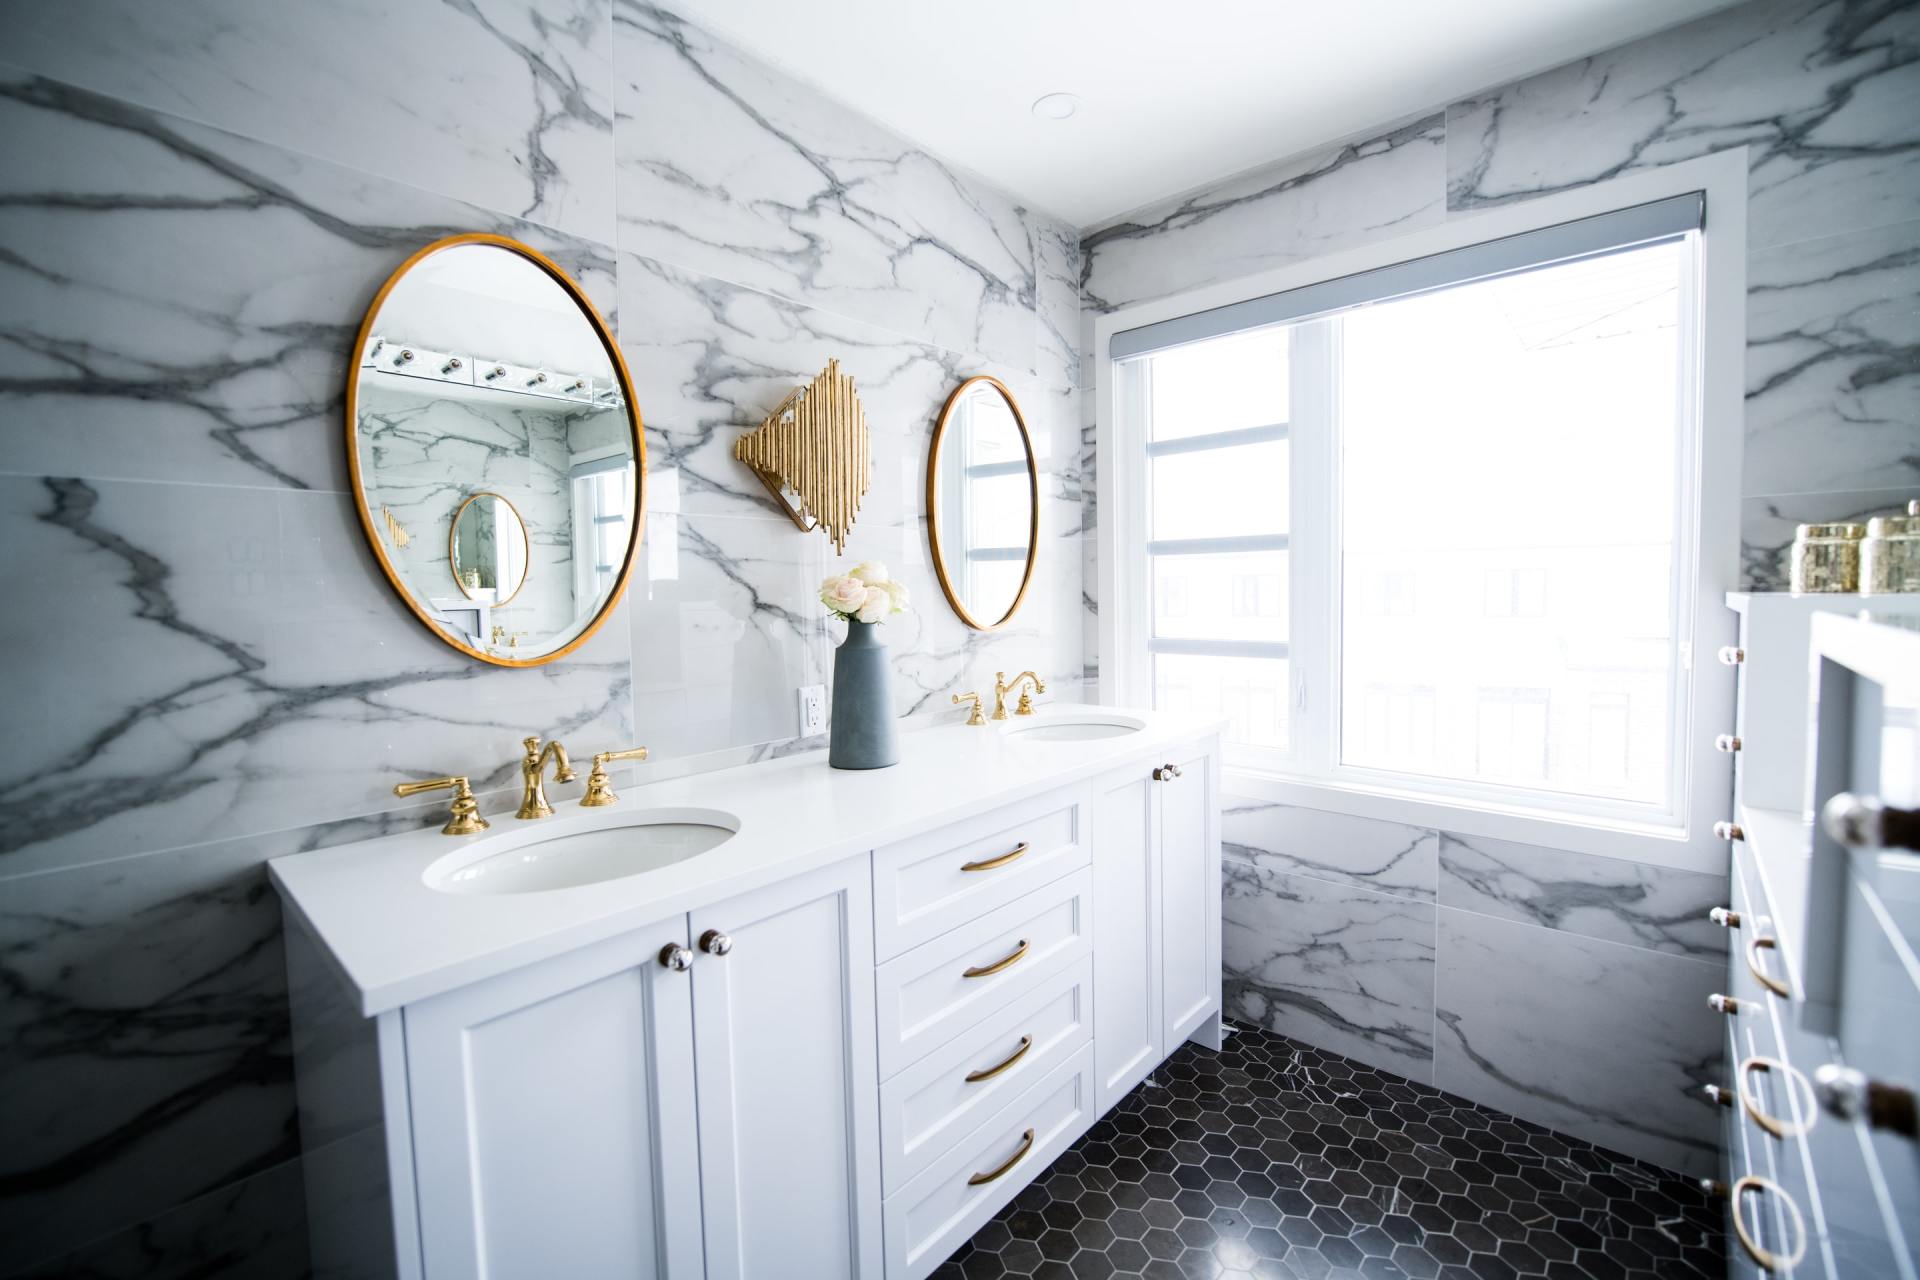 An aesthetic looking marbled bathroom